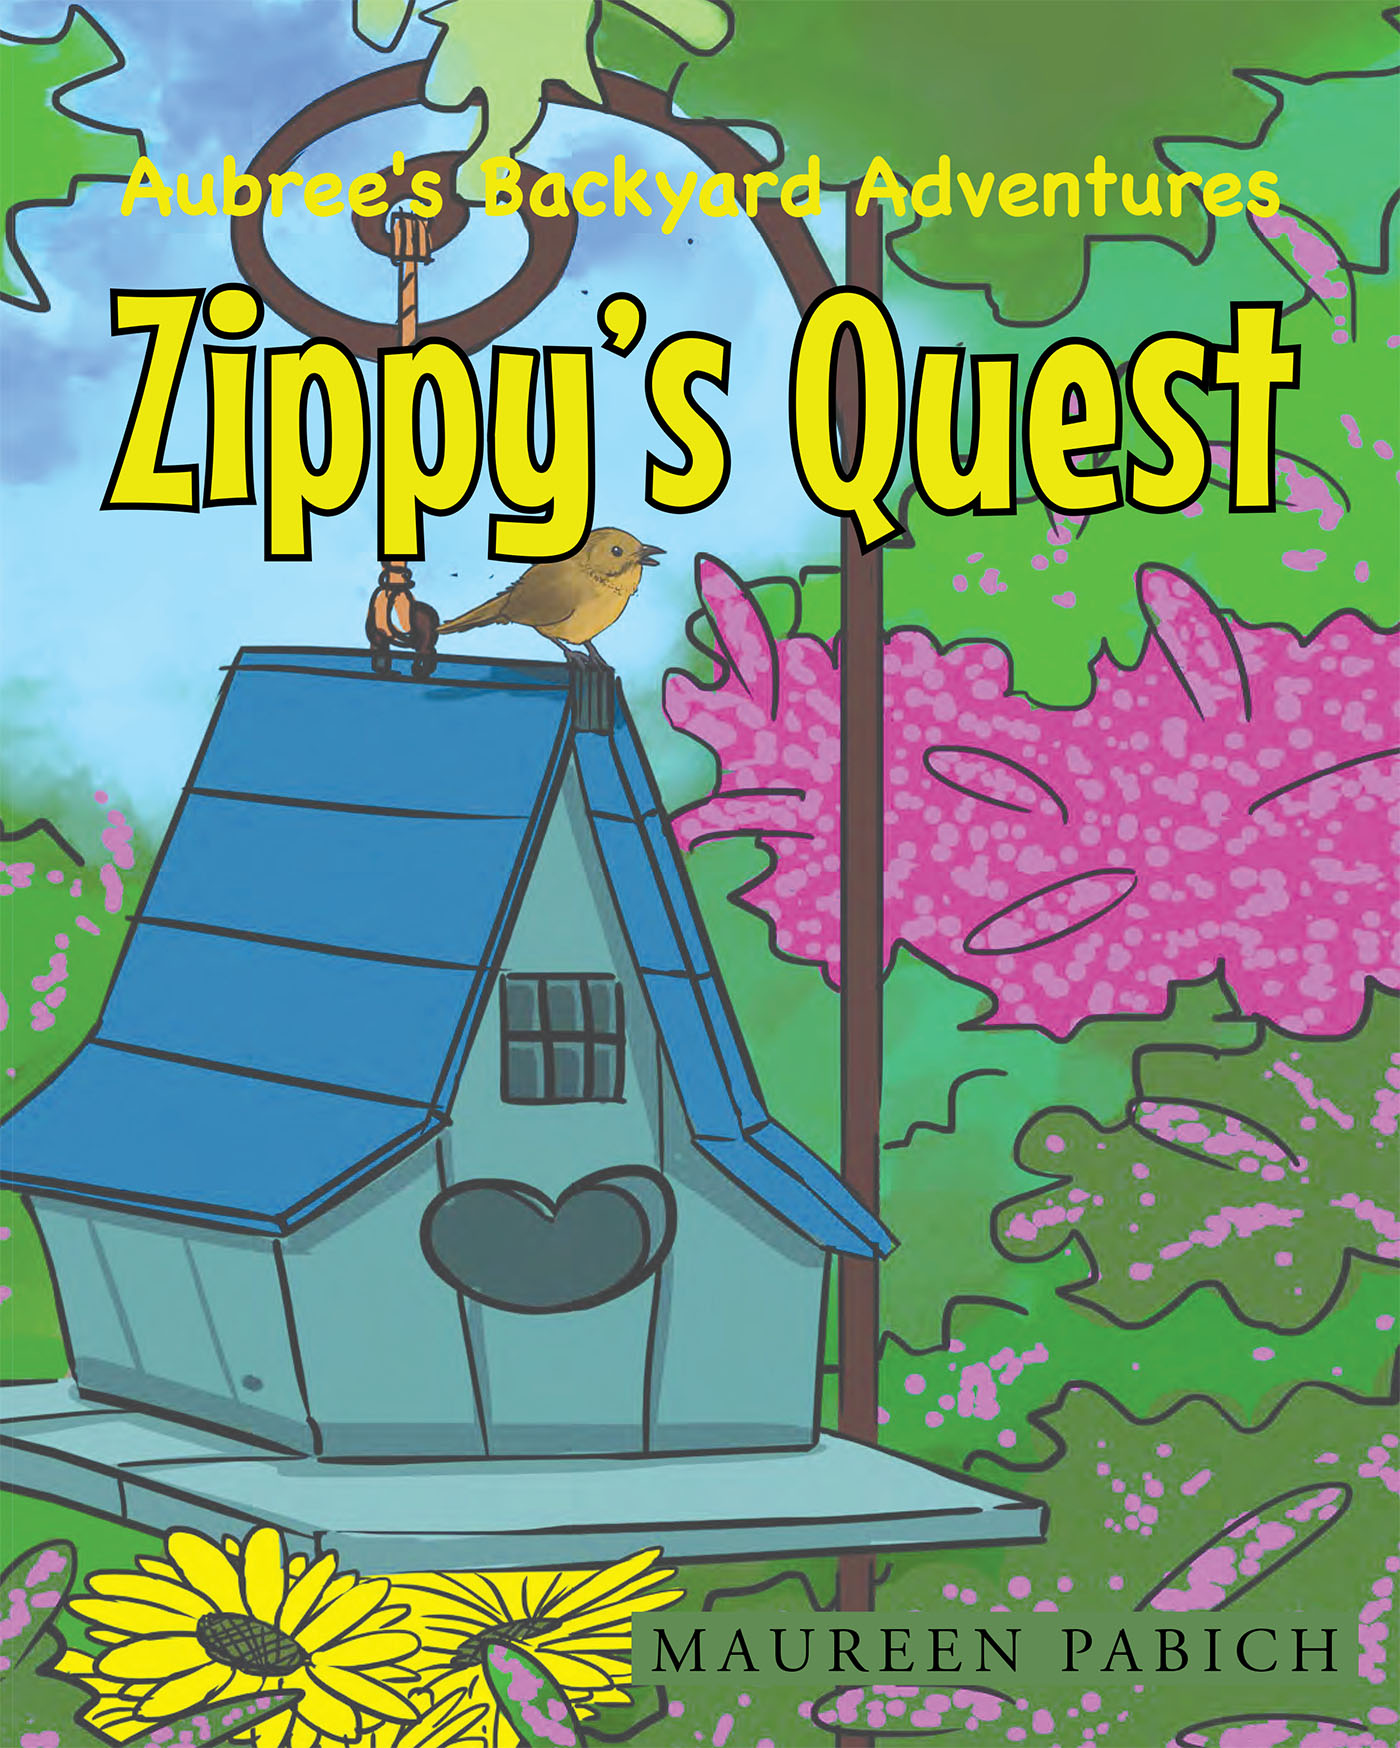 Aubree's Backyard Adventures - Zippy's Quest Cover Image